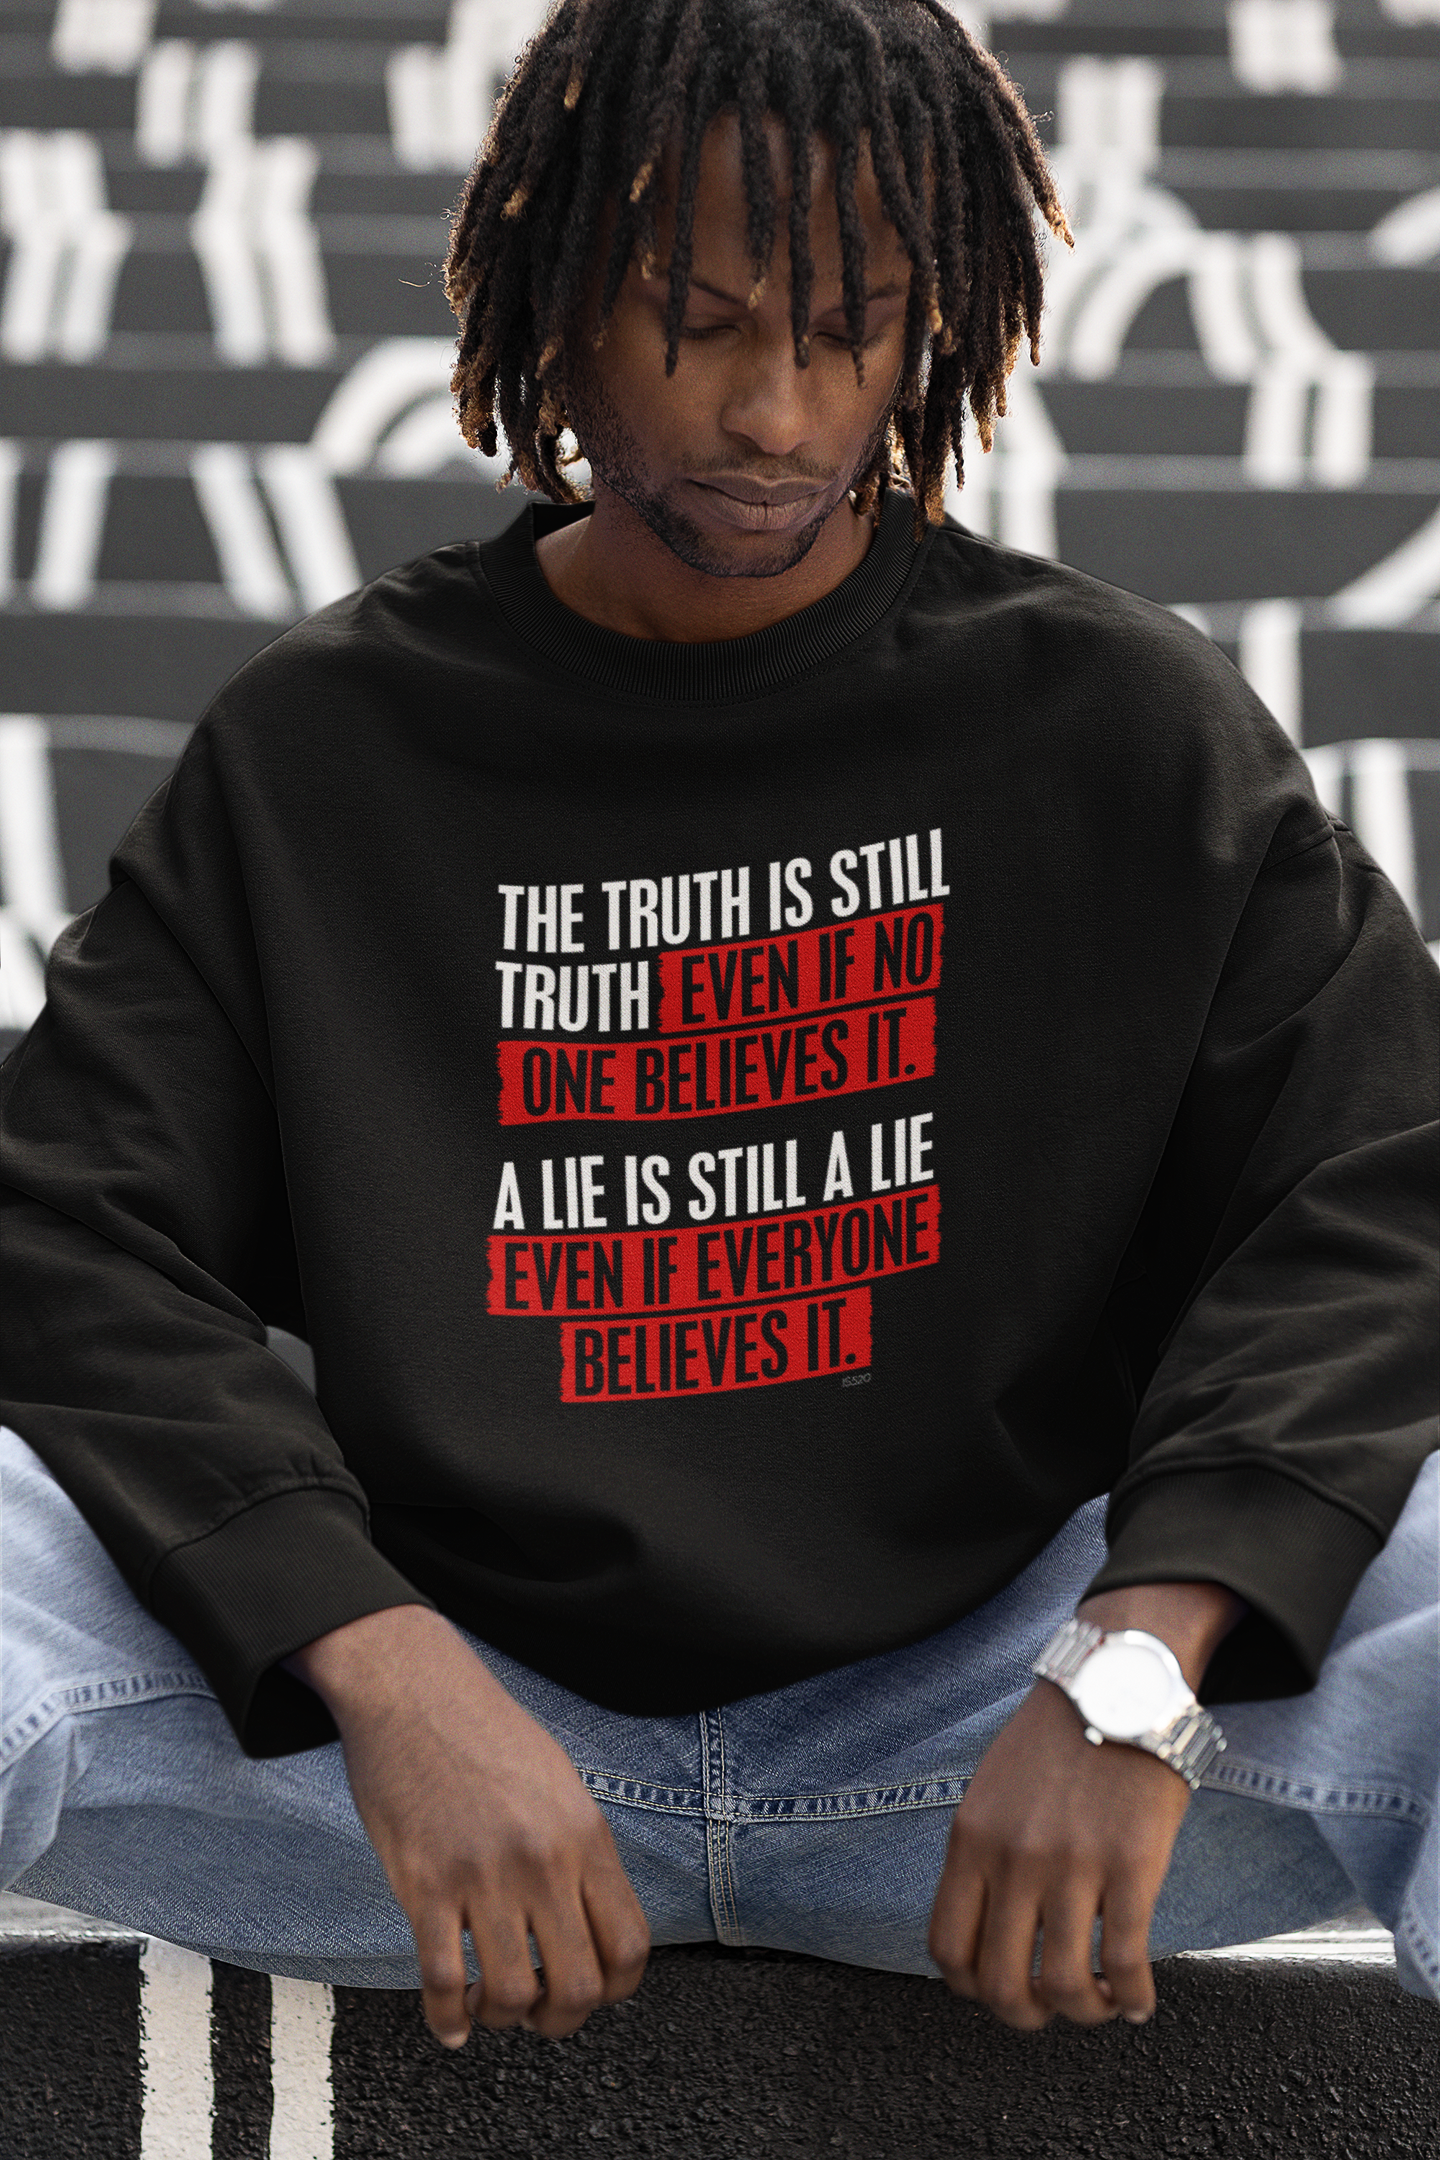 The Truth is still the Truth. Sweatshirt.